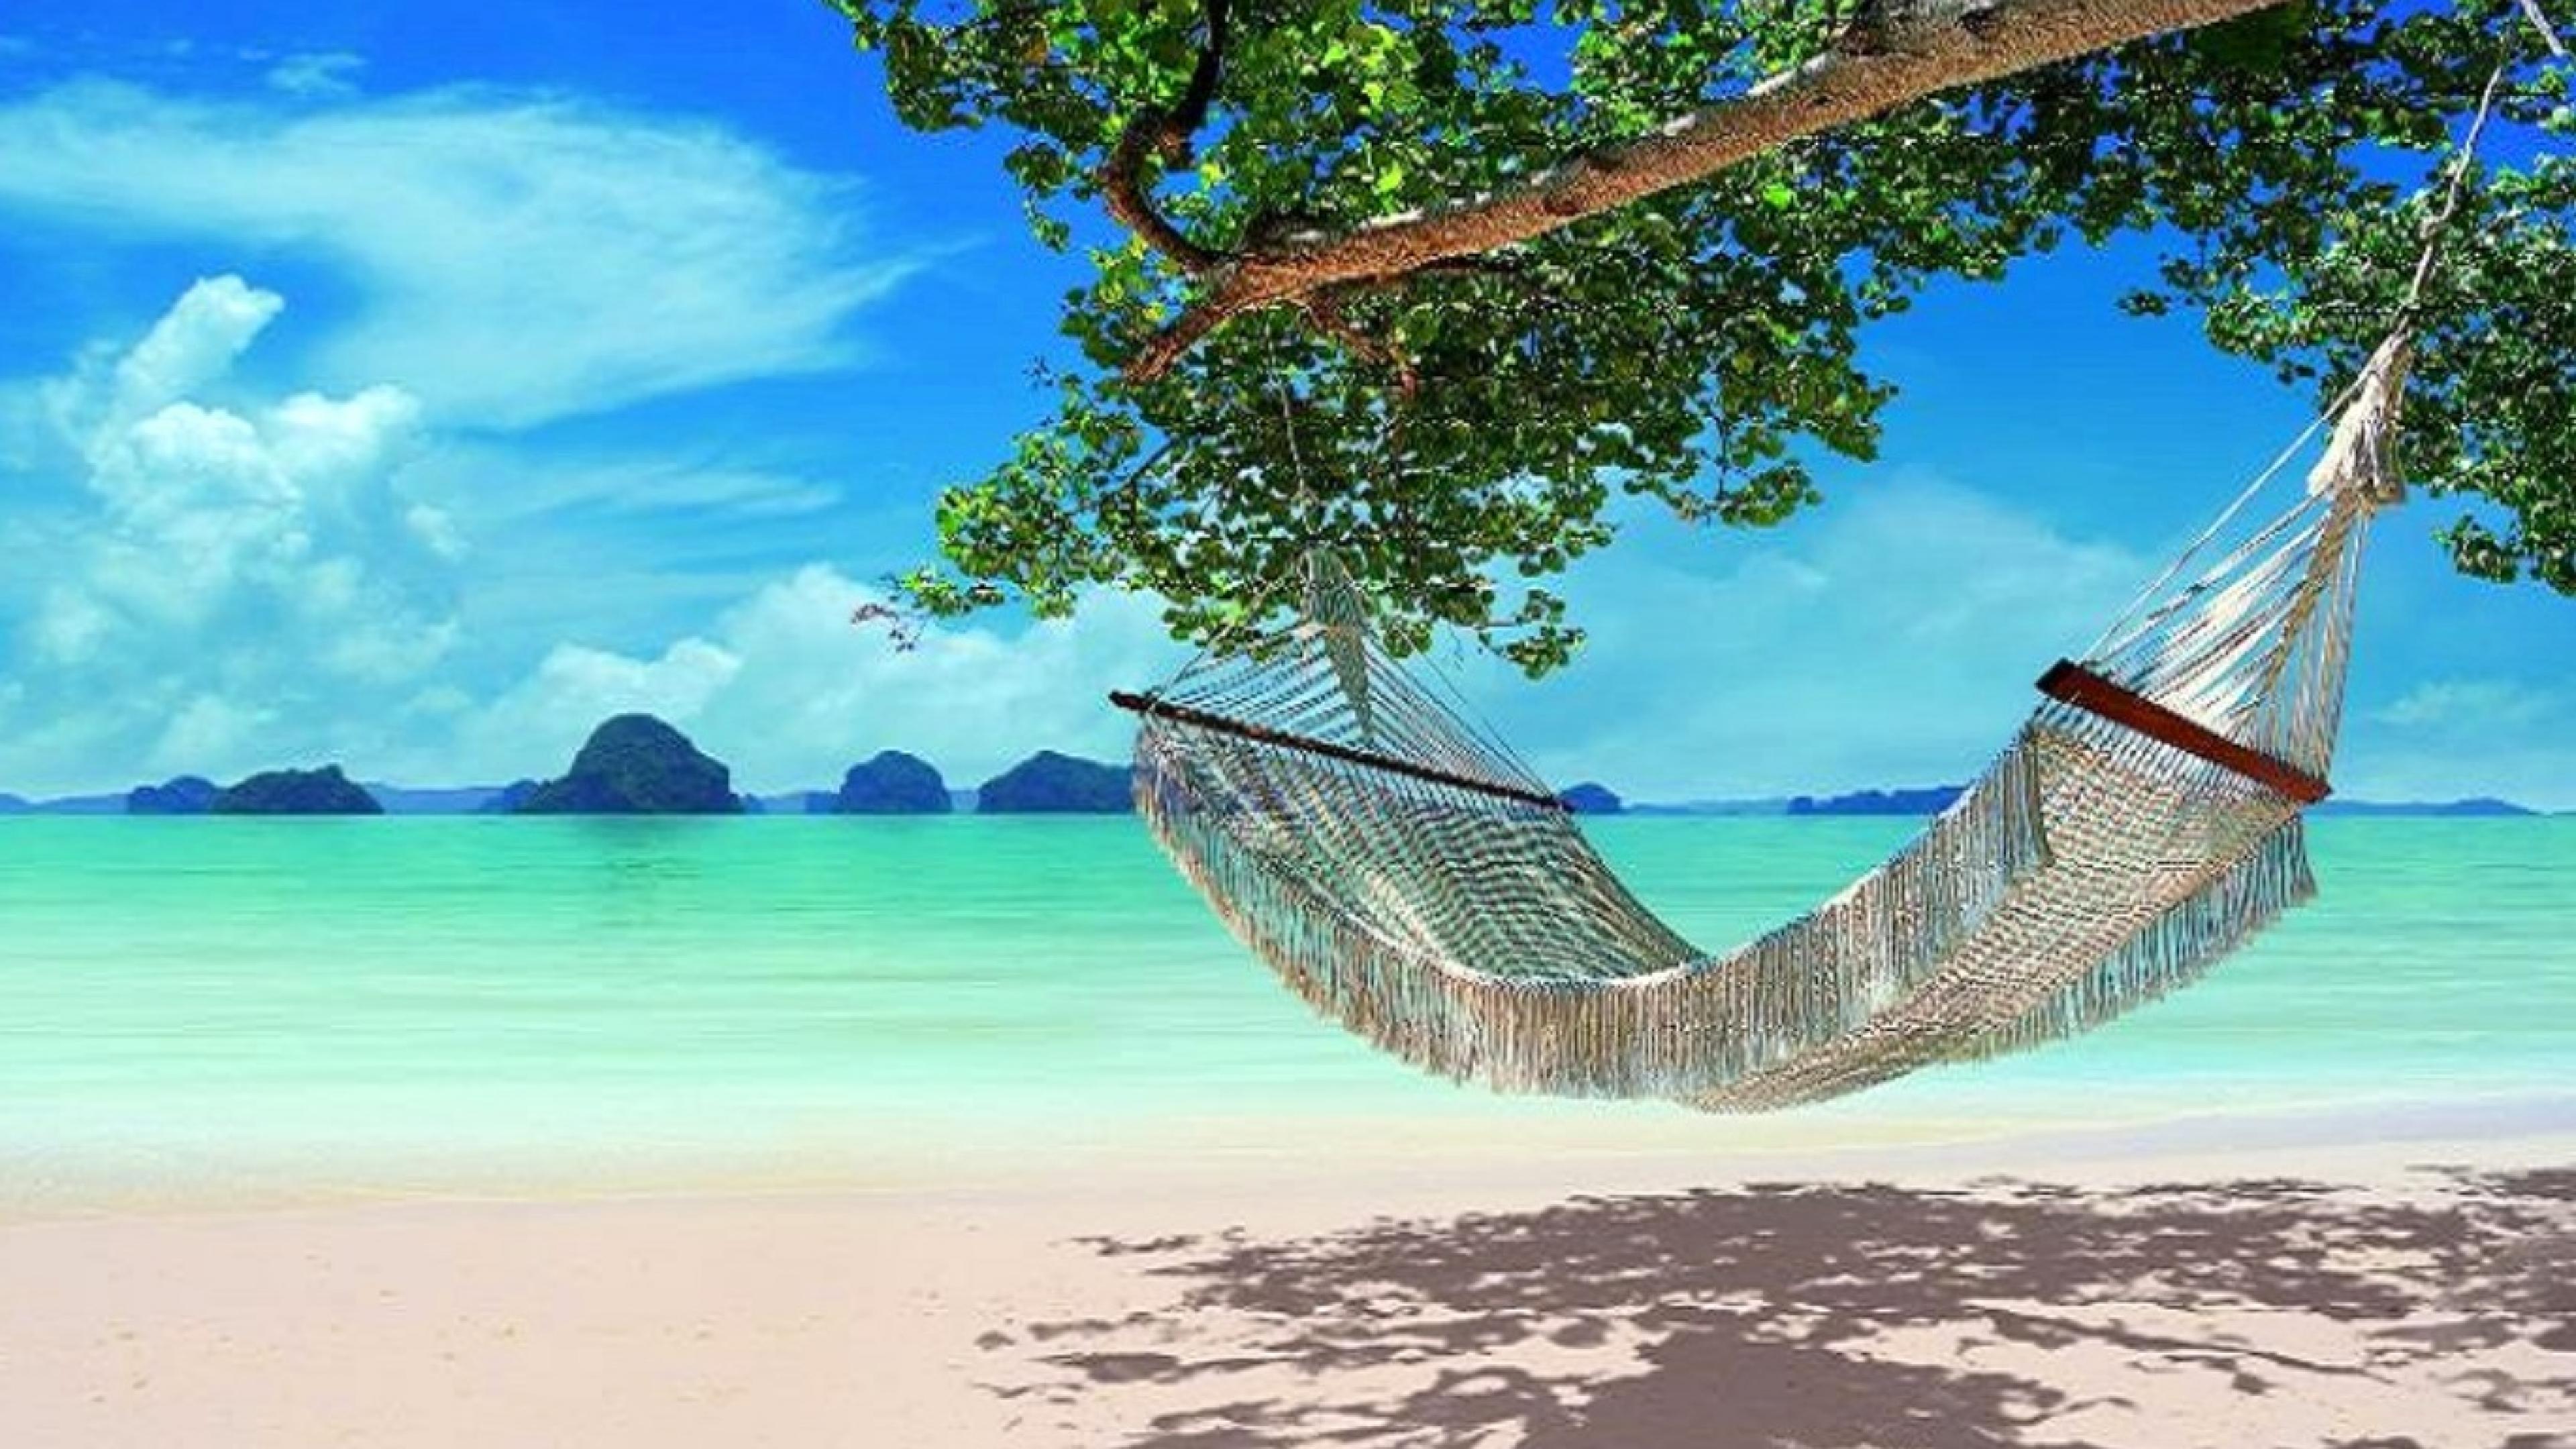 Relaxing hammock on the beautiful blue water